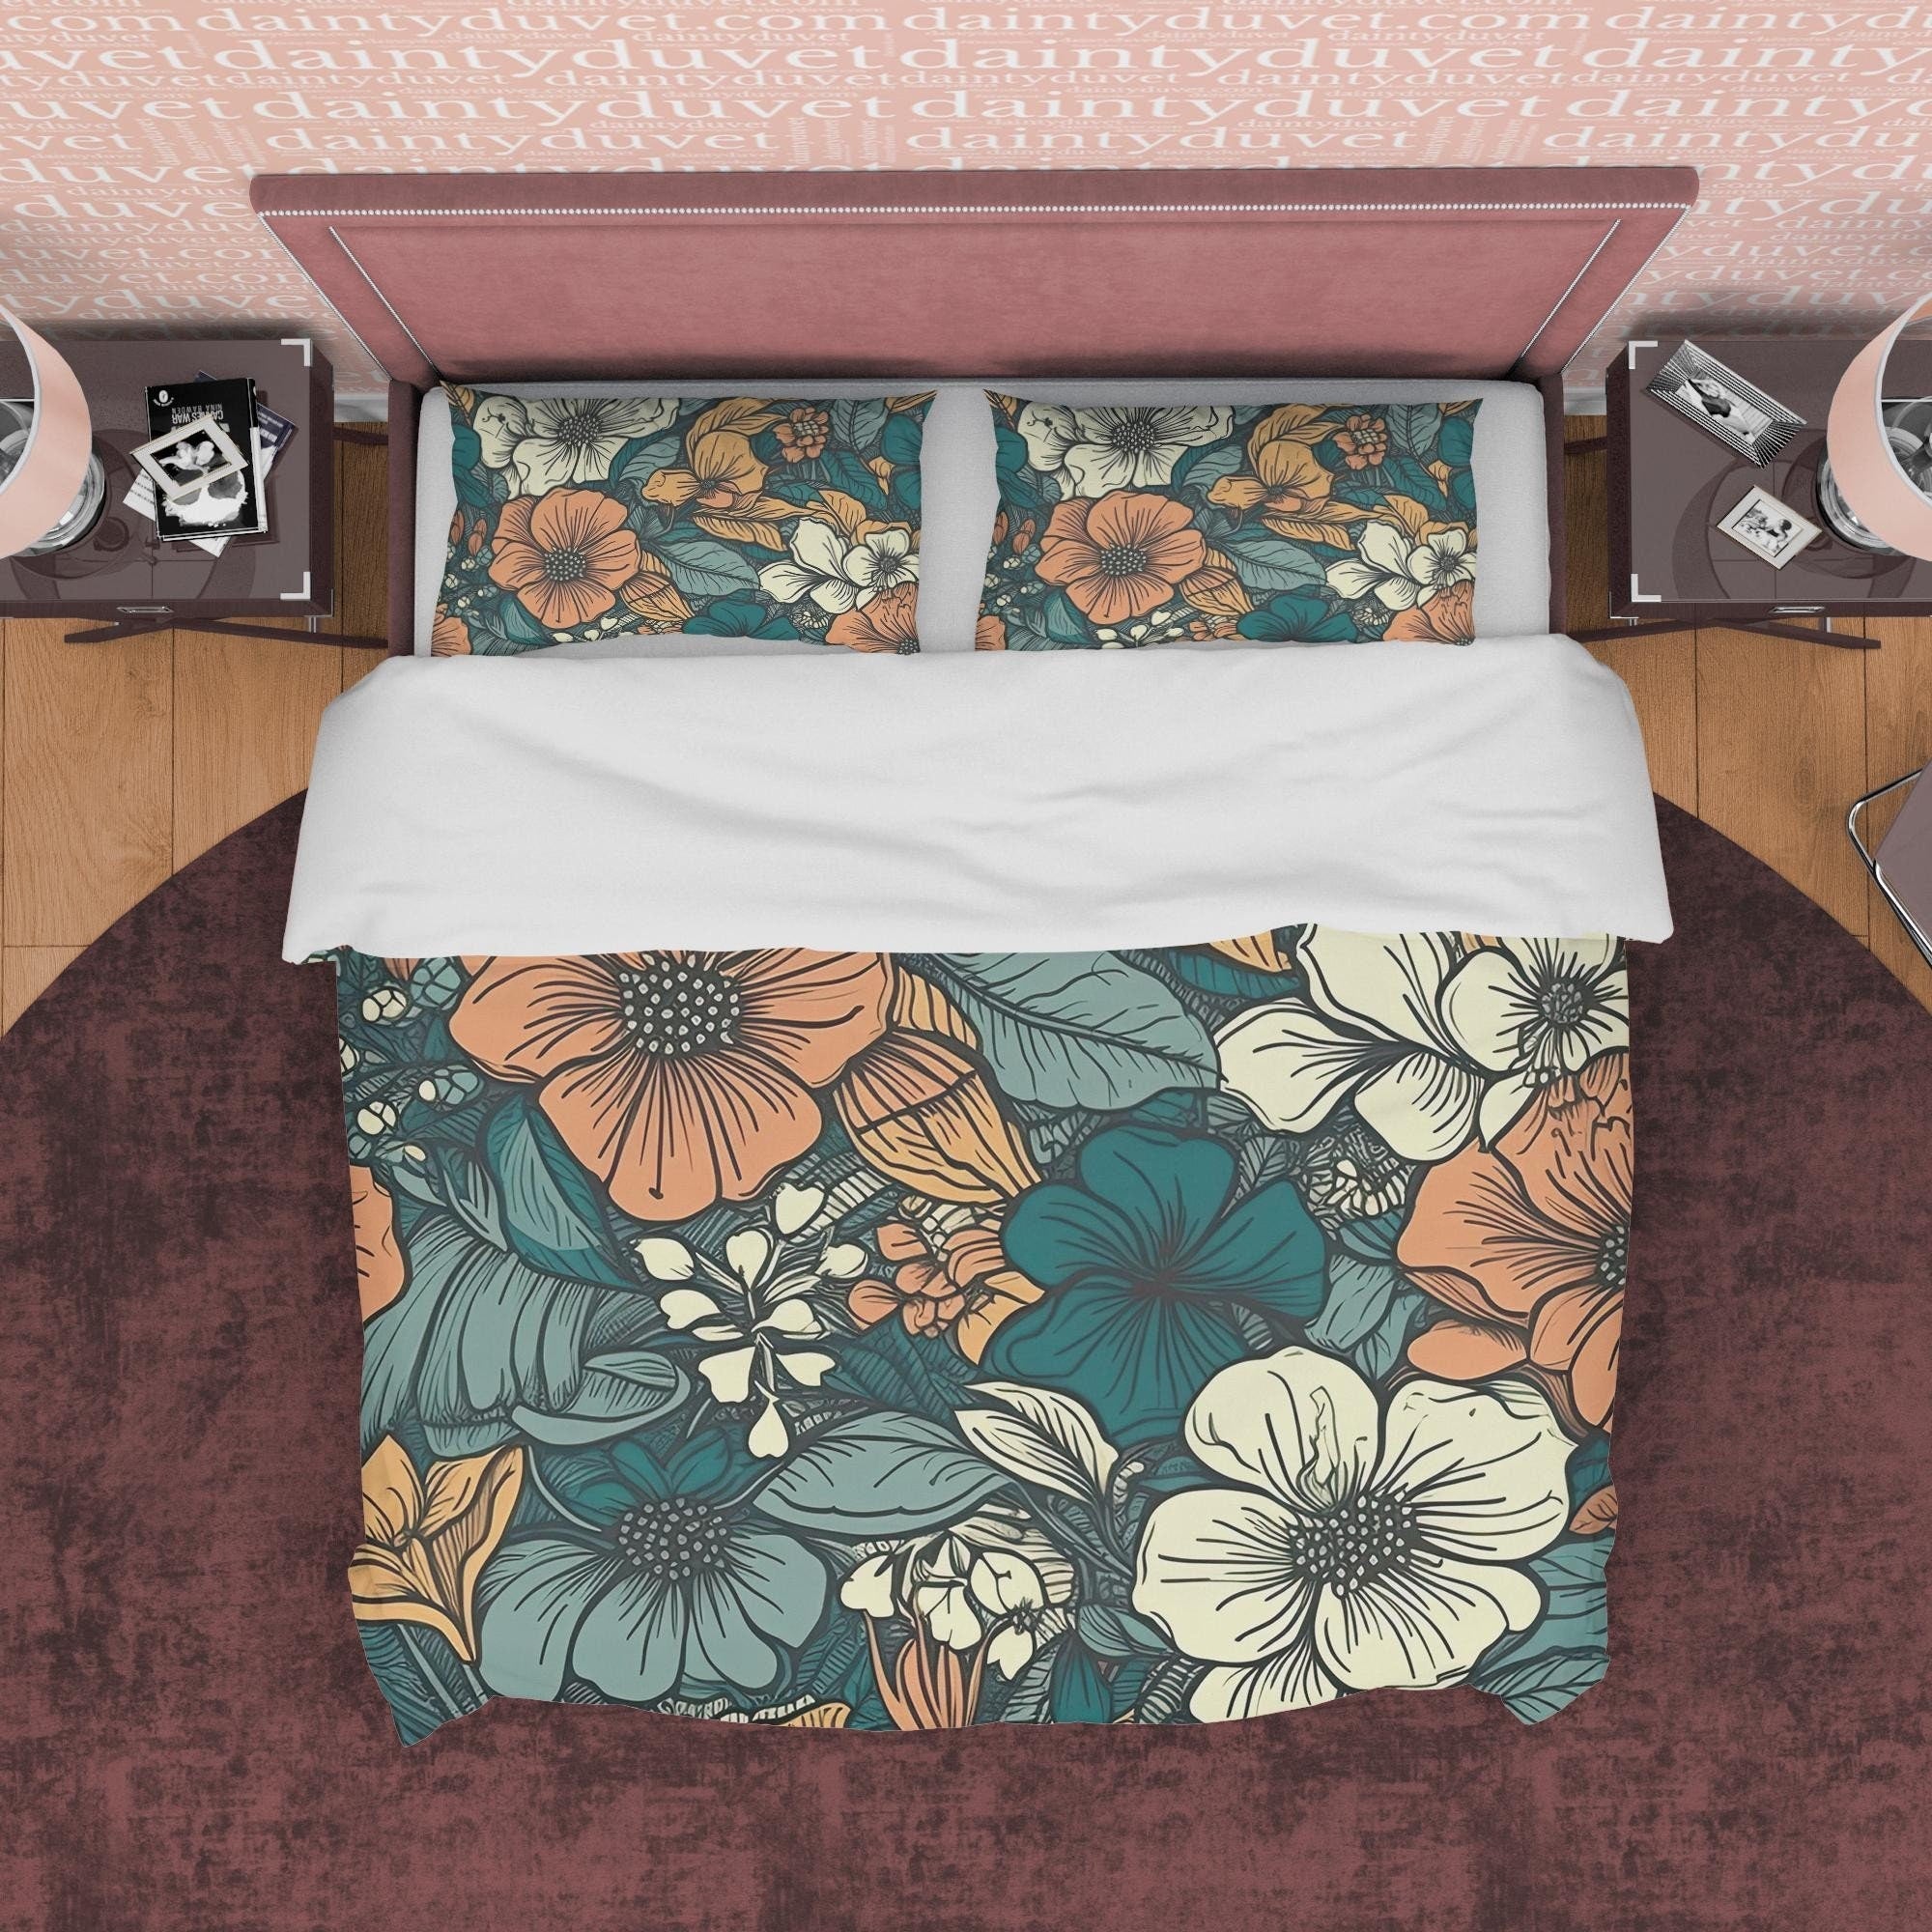 Floral Retro Bedding Set, Green Cotton Duvet Cover, Random Flower Quilt Cover, Unique Bedspread, 70's Nostalgia Bed Cover, Zipper Bedding